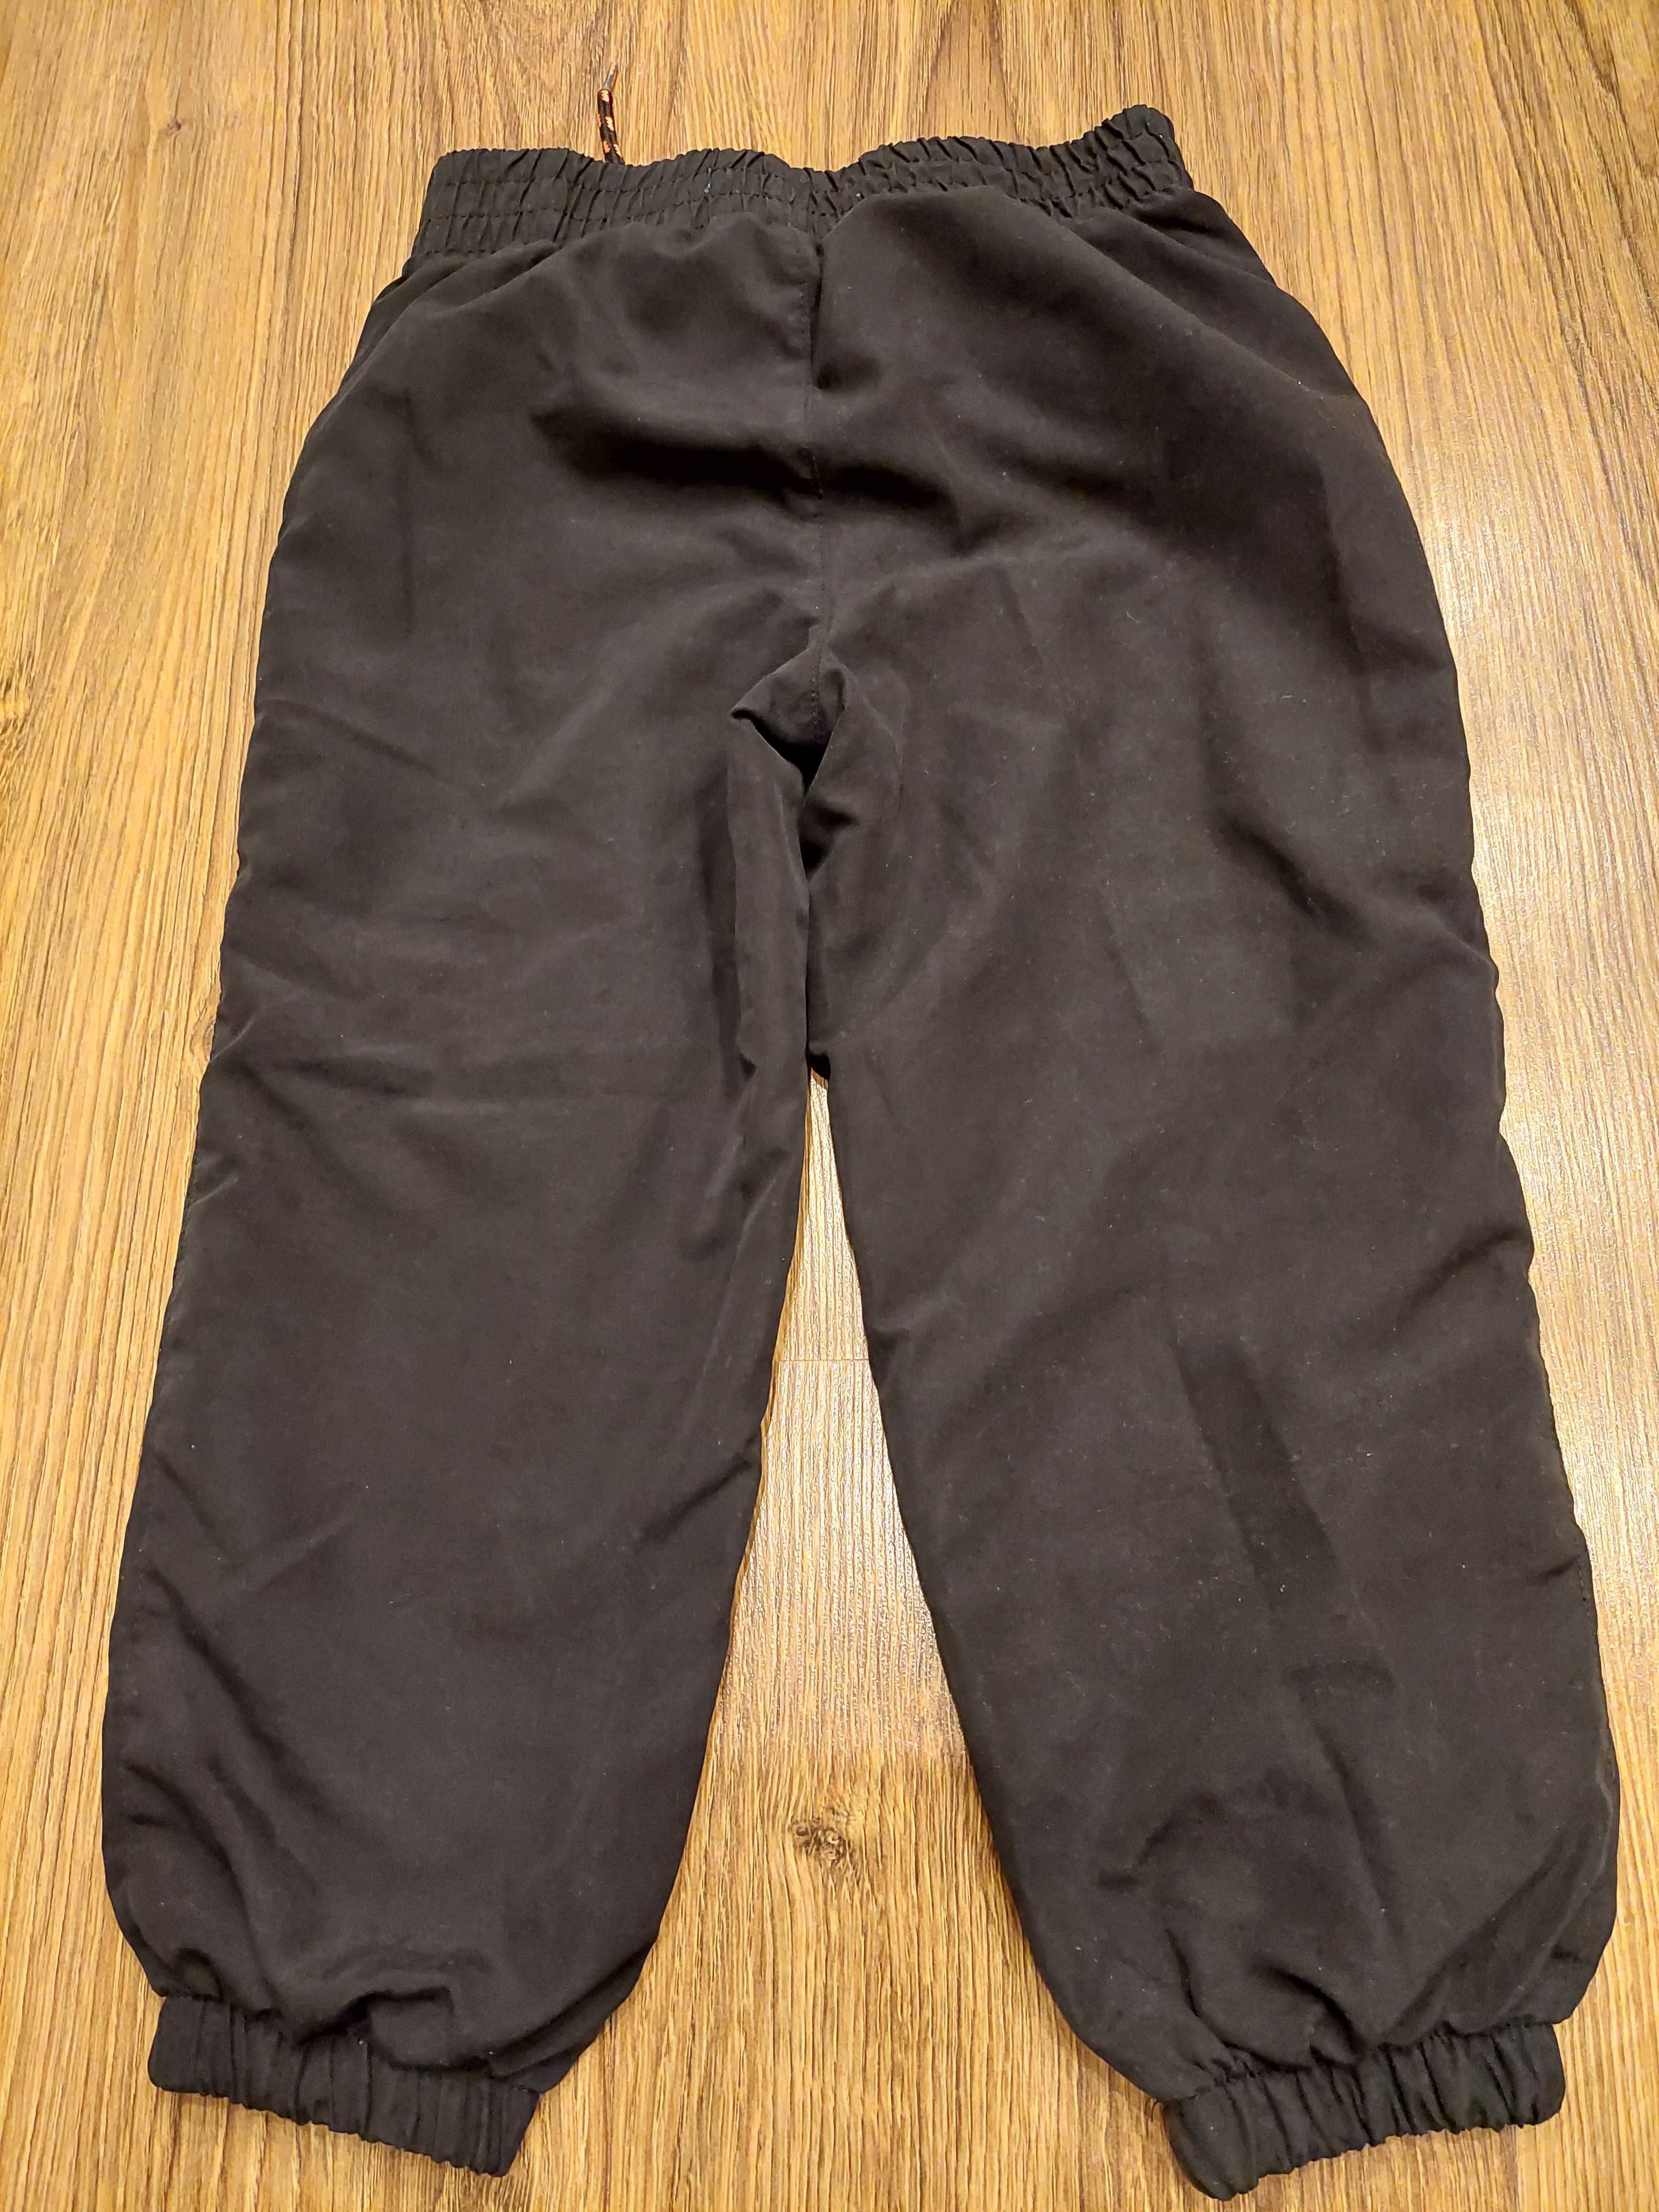 Spodnie cienkie czarne primark 104